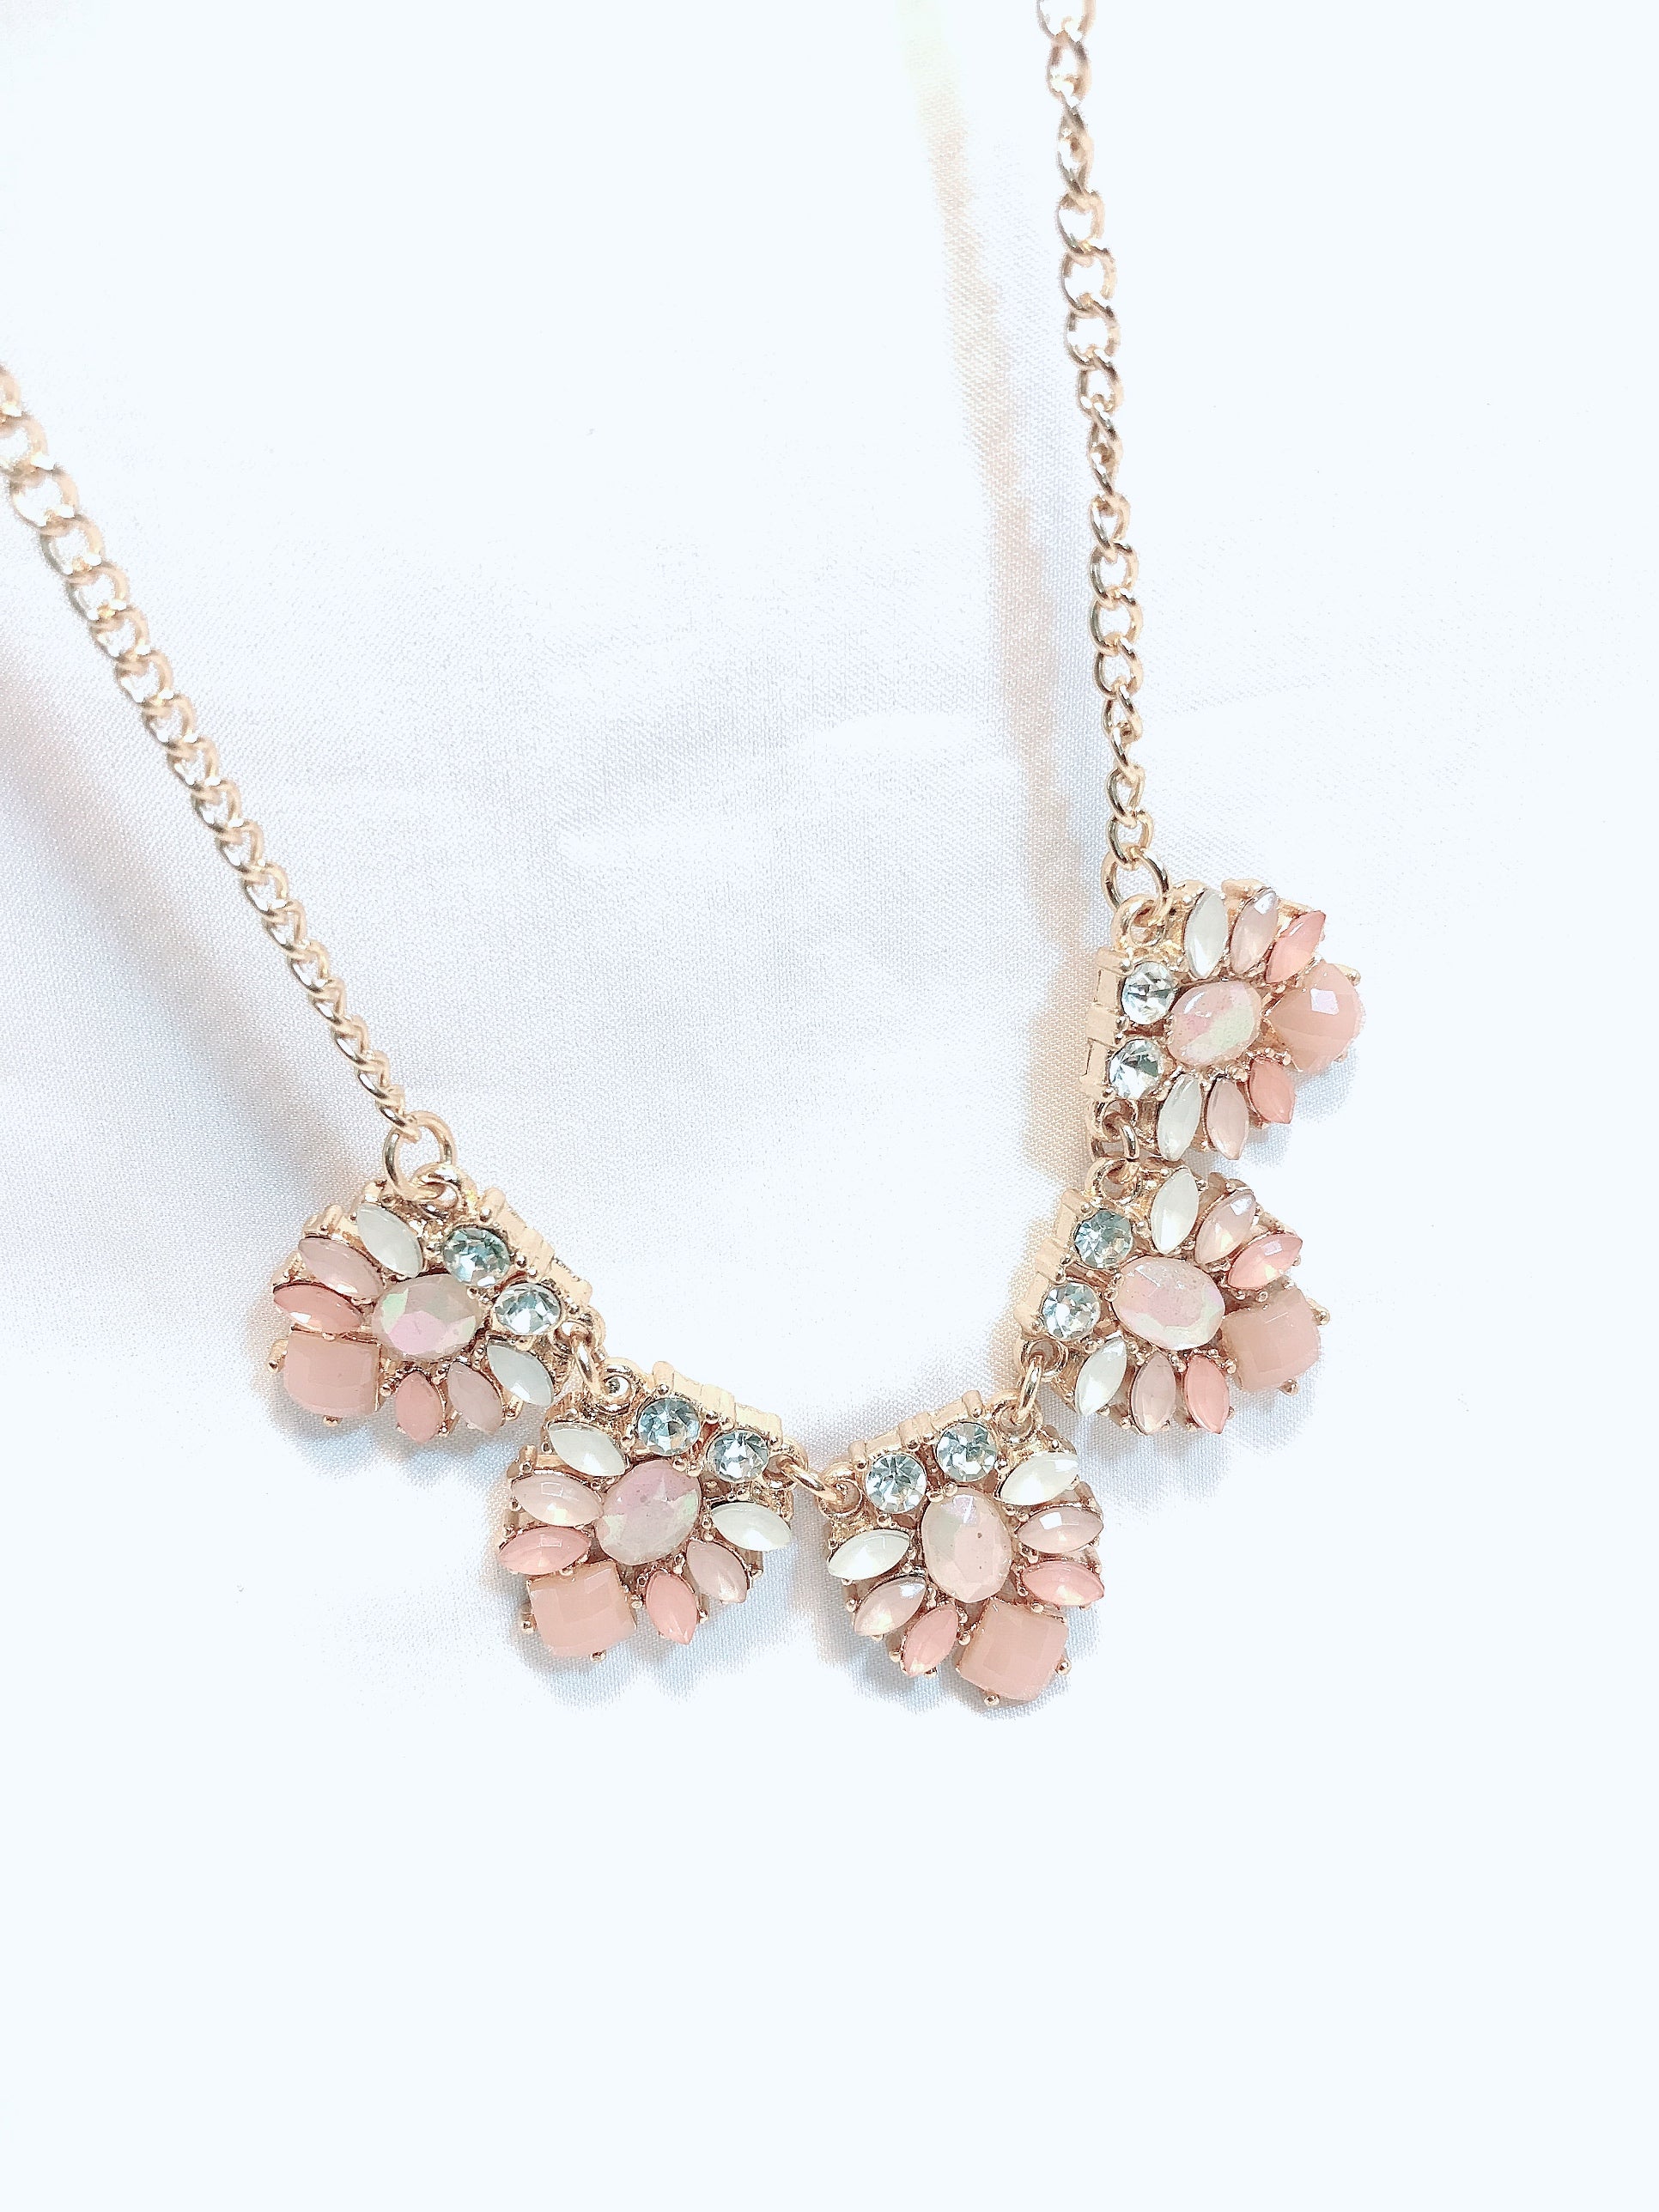 Peach Stone Necklace